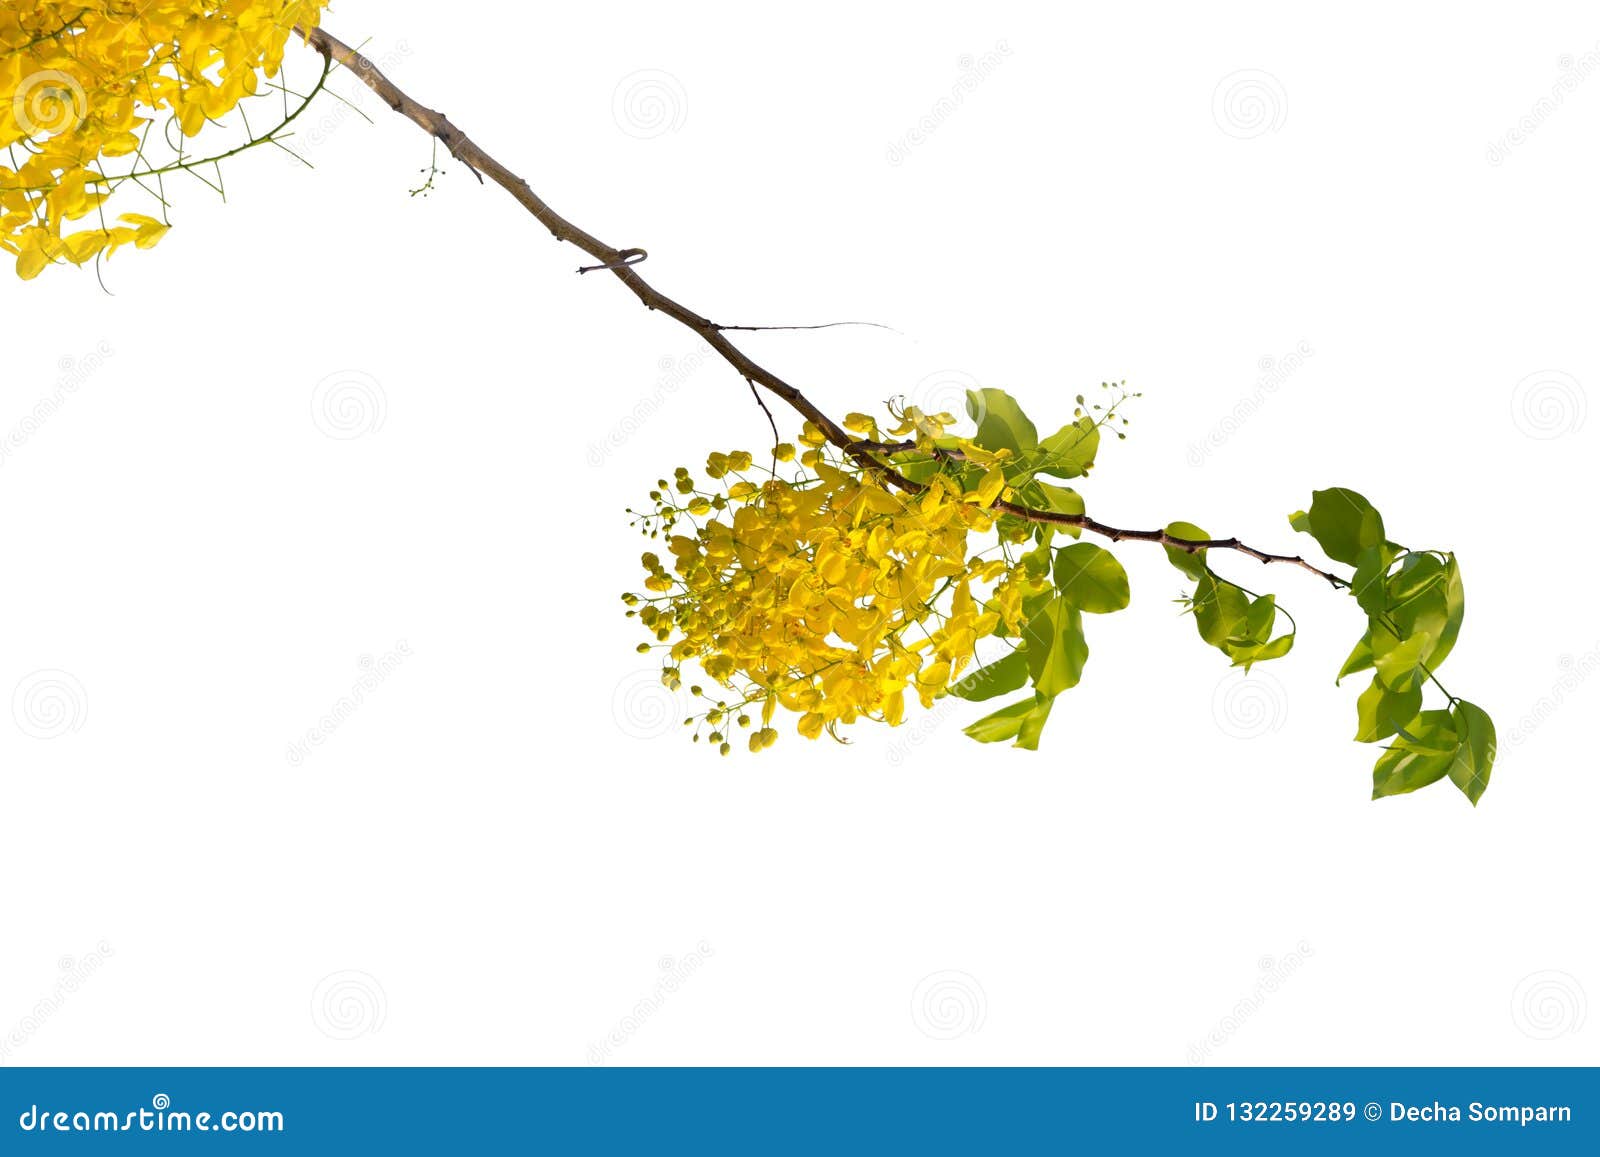 Yellow Flower Isolated on White Background Stock Image - Image of